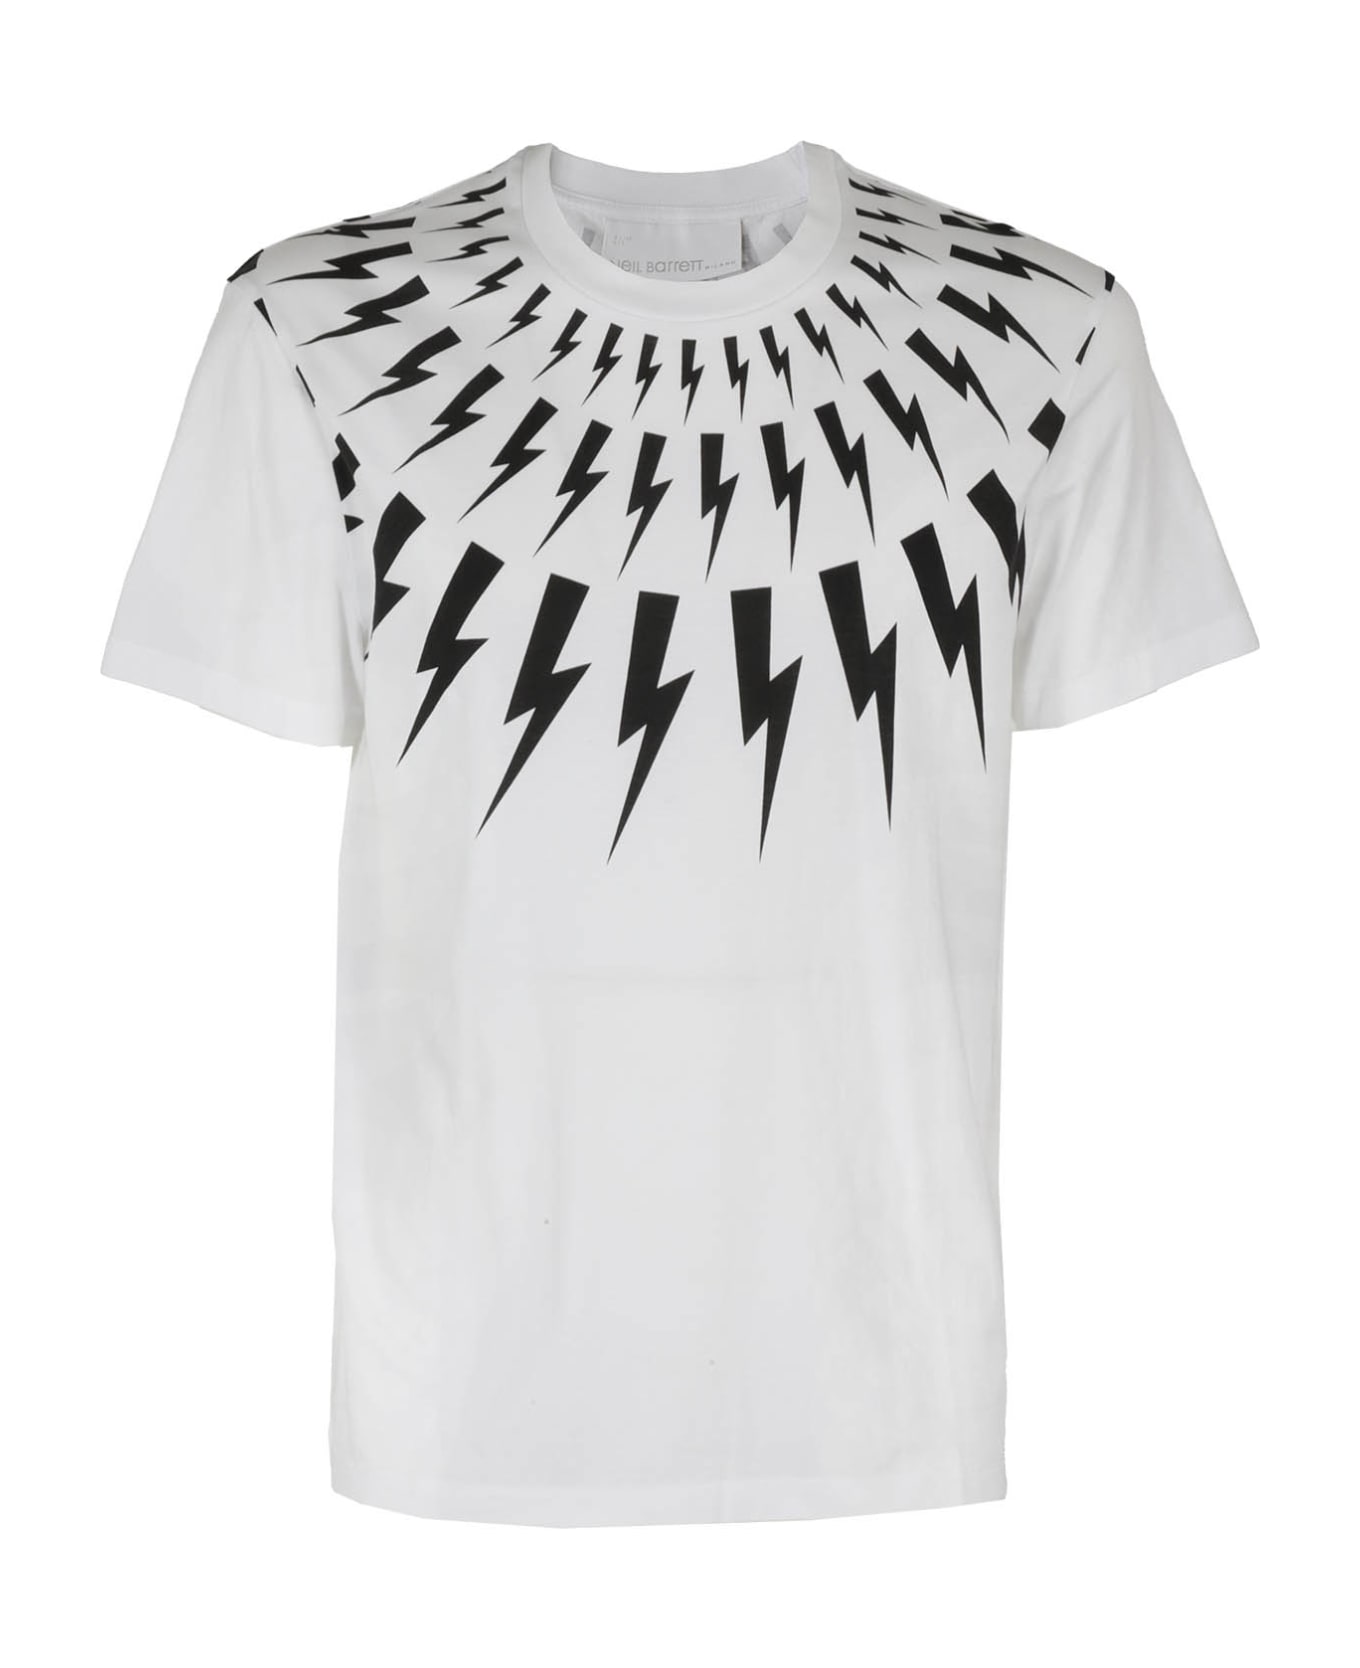 Neil Barrett Fairisle Thunderbolt Slim T-shirt - White Black シャツ